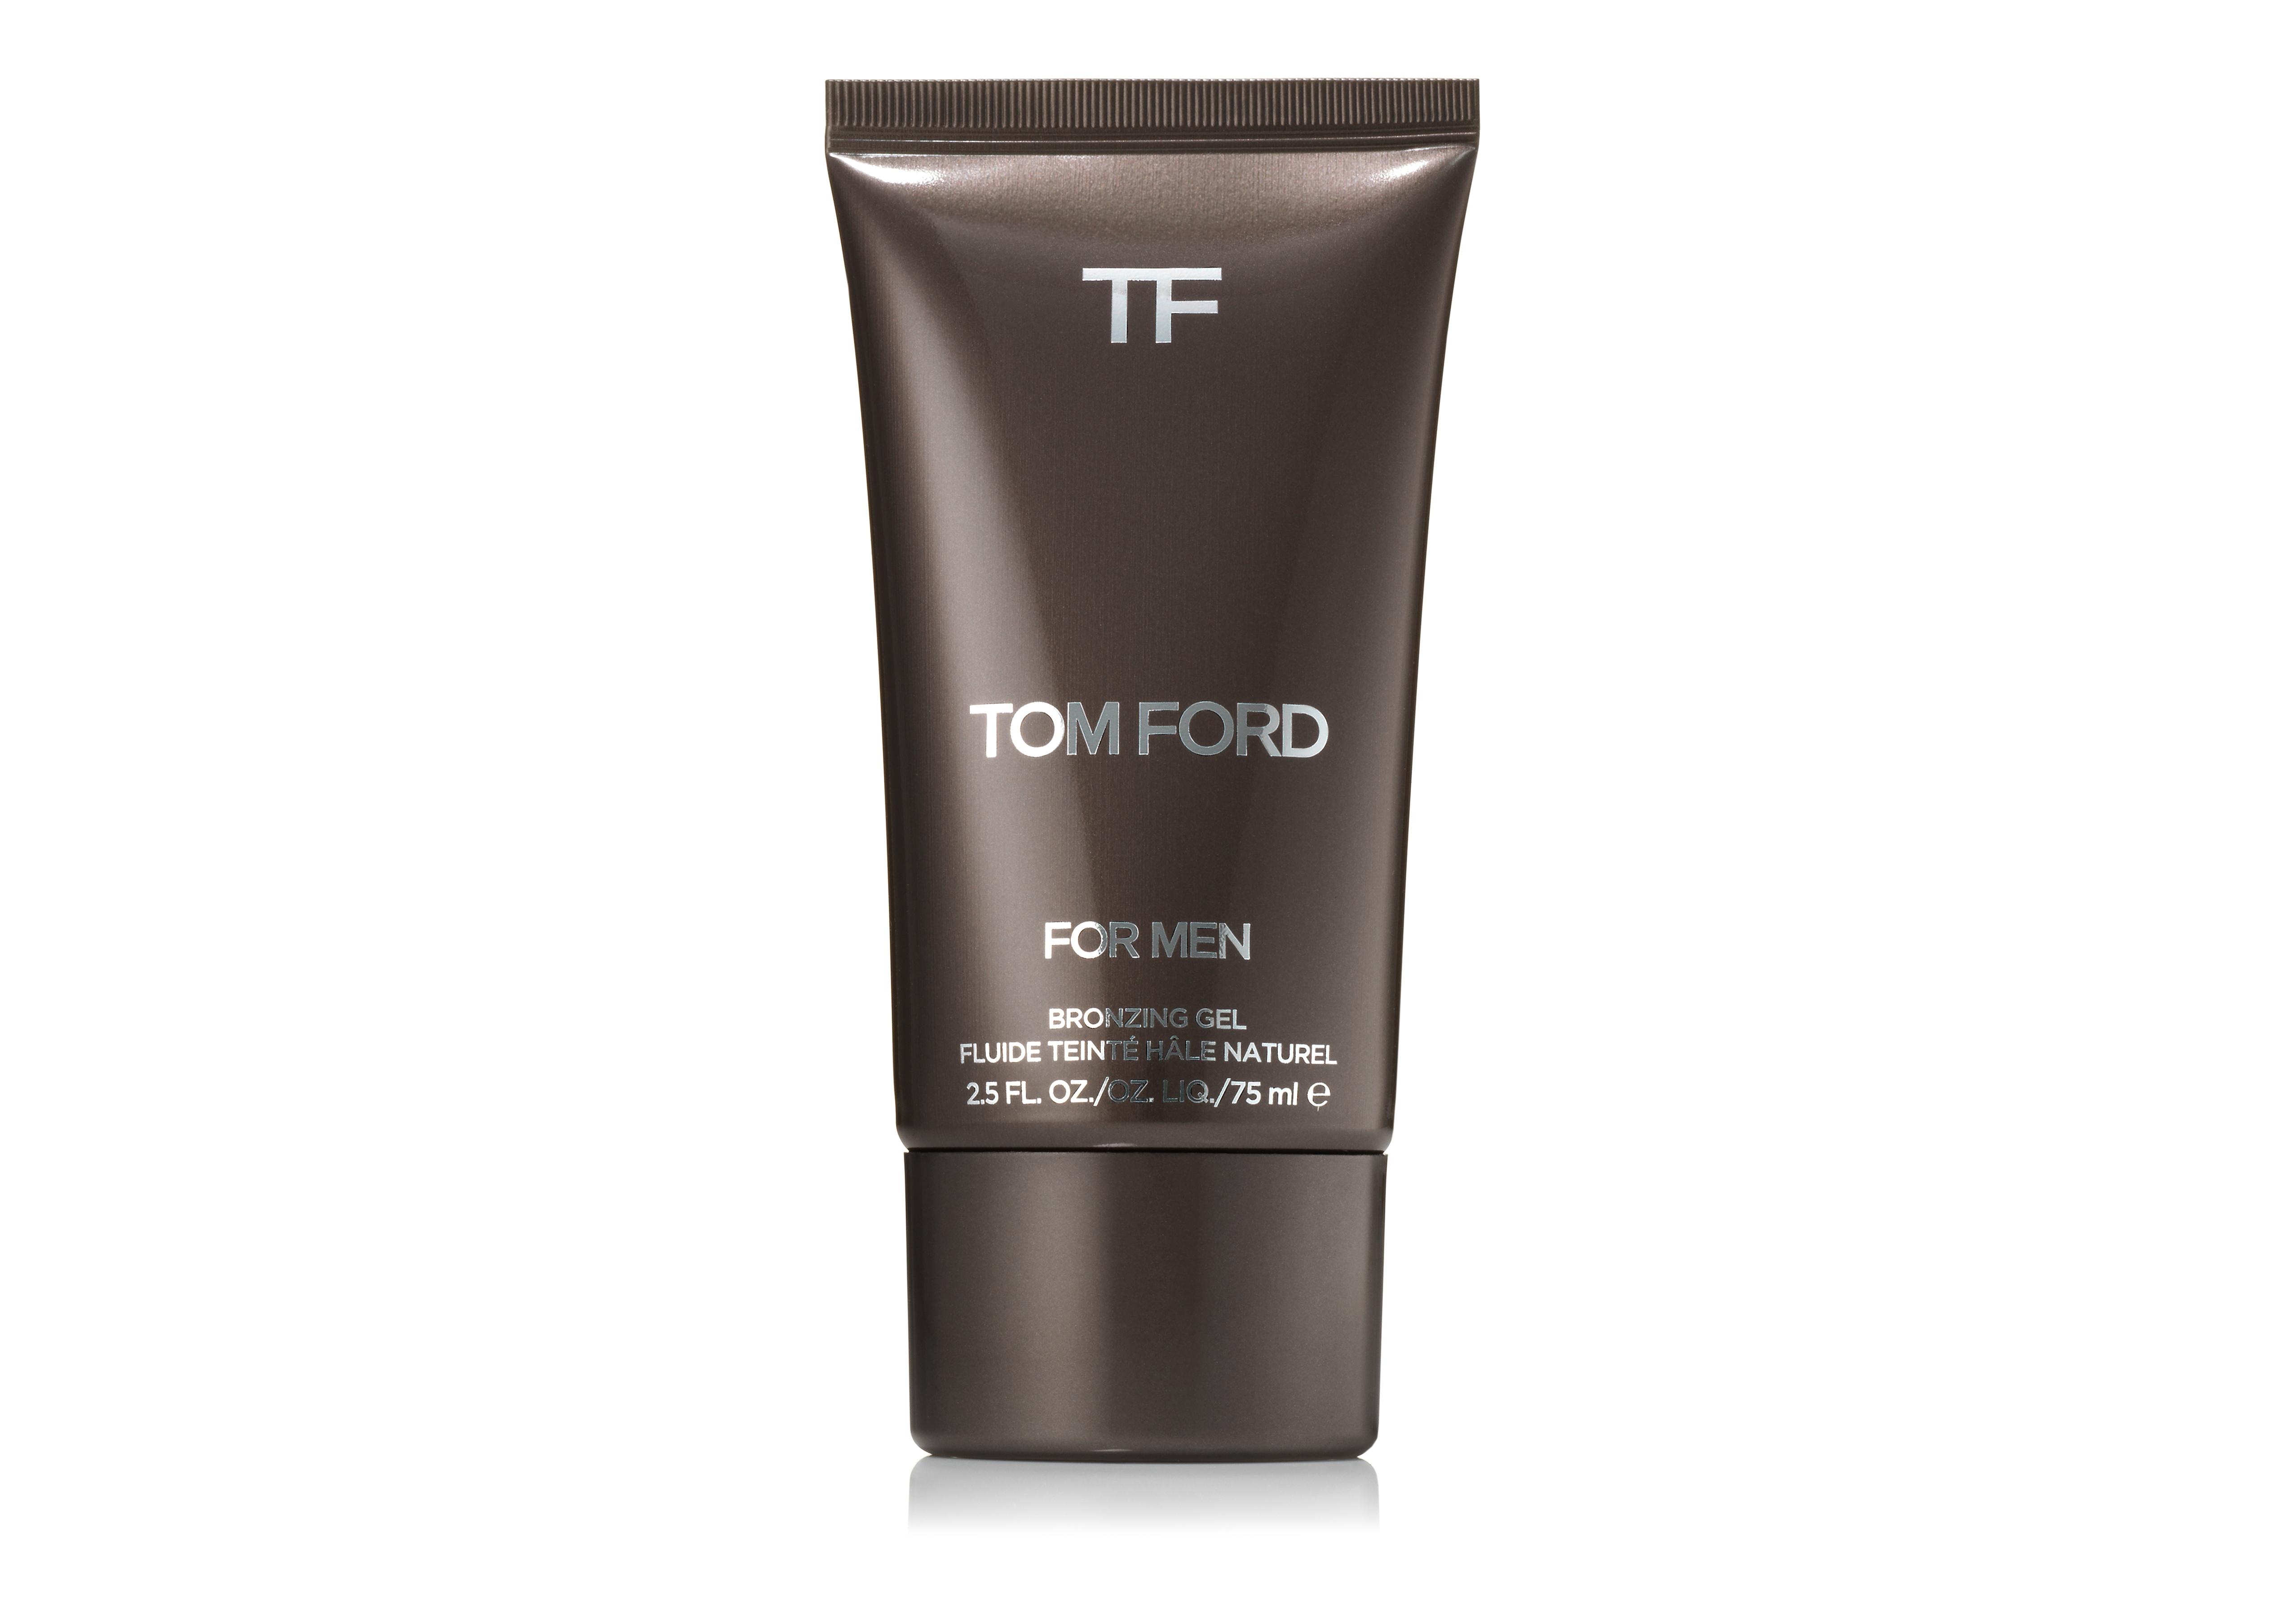 Tom Ford BRONZING GEL TomFord.com